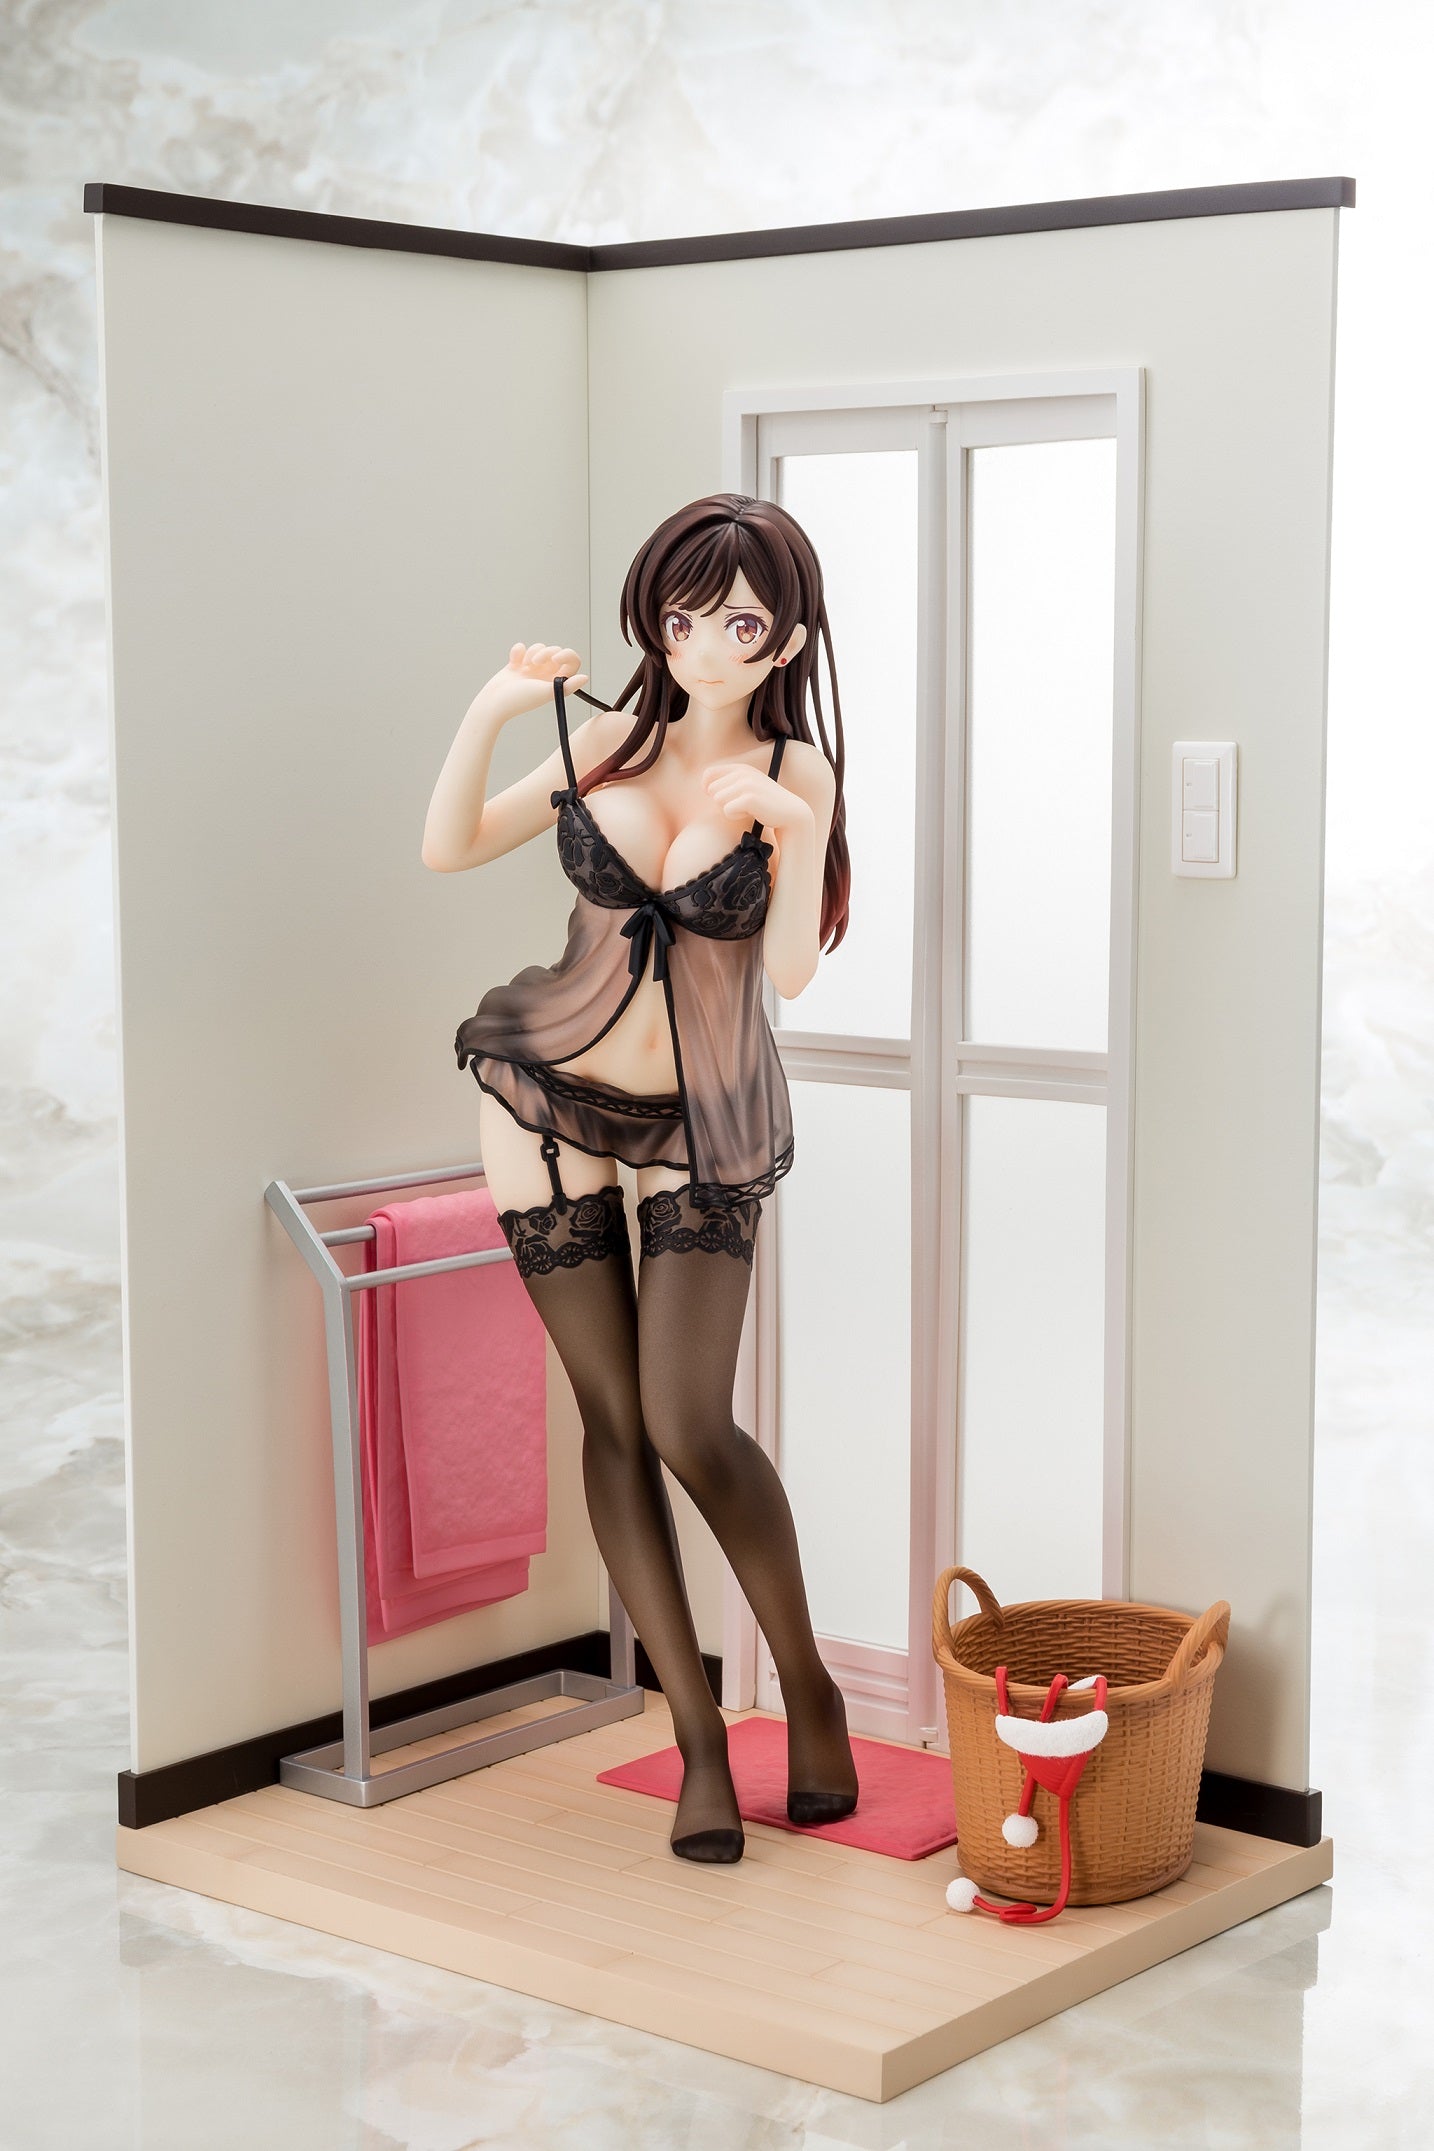 1/6 scaled pre-painted figure Rent-A-Girlfriend MIZUHARA Chizuru in see-through lingerie figure